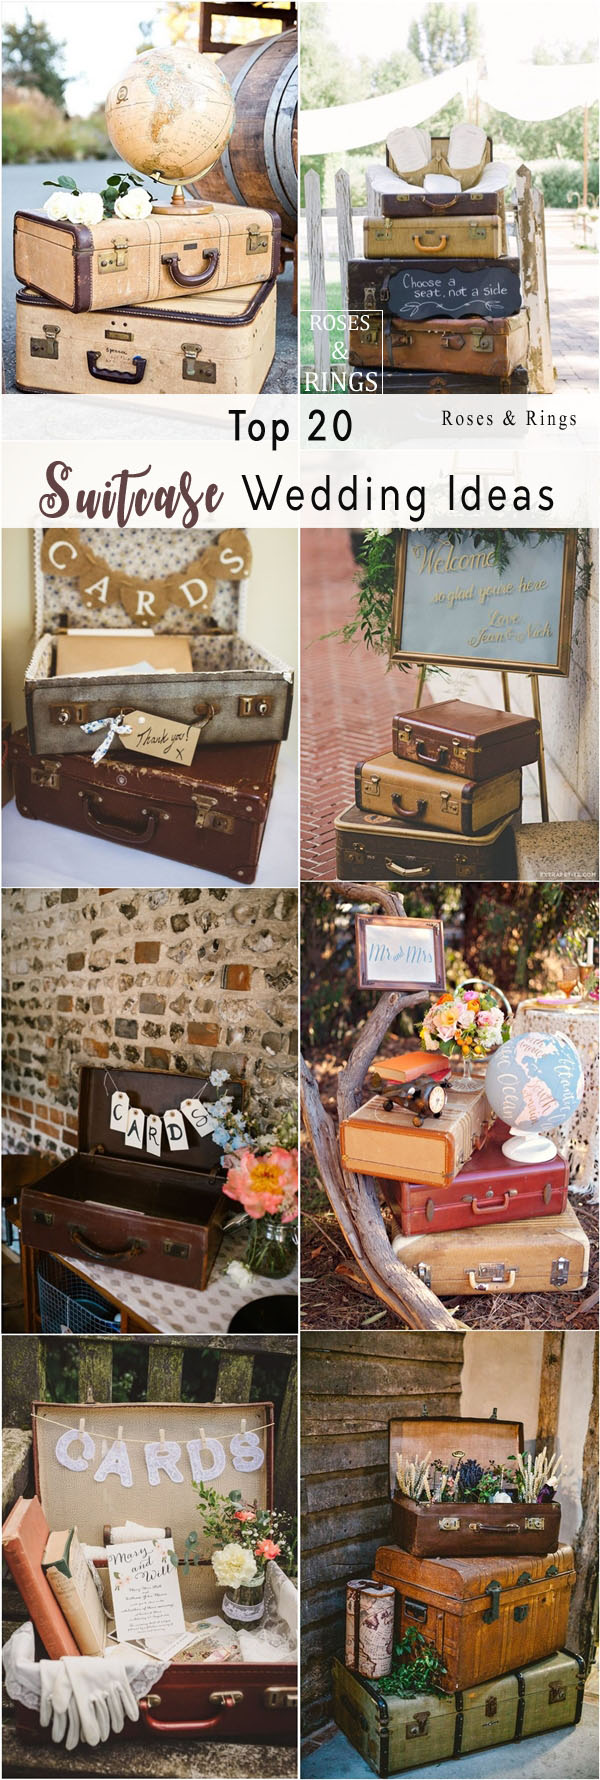 vintage wedding ideas -suitcase wedding decor ideas